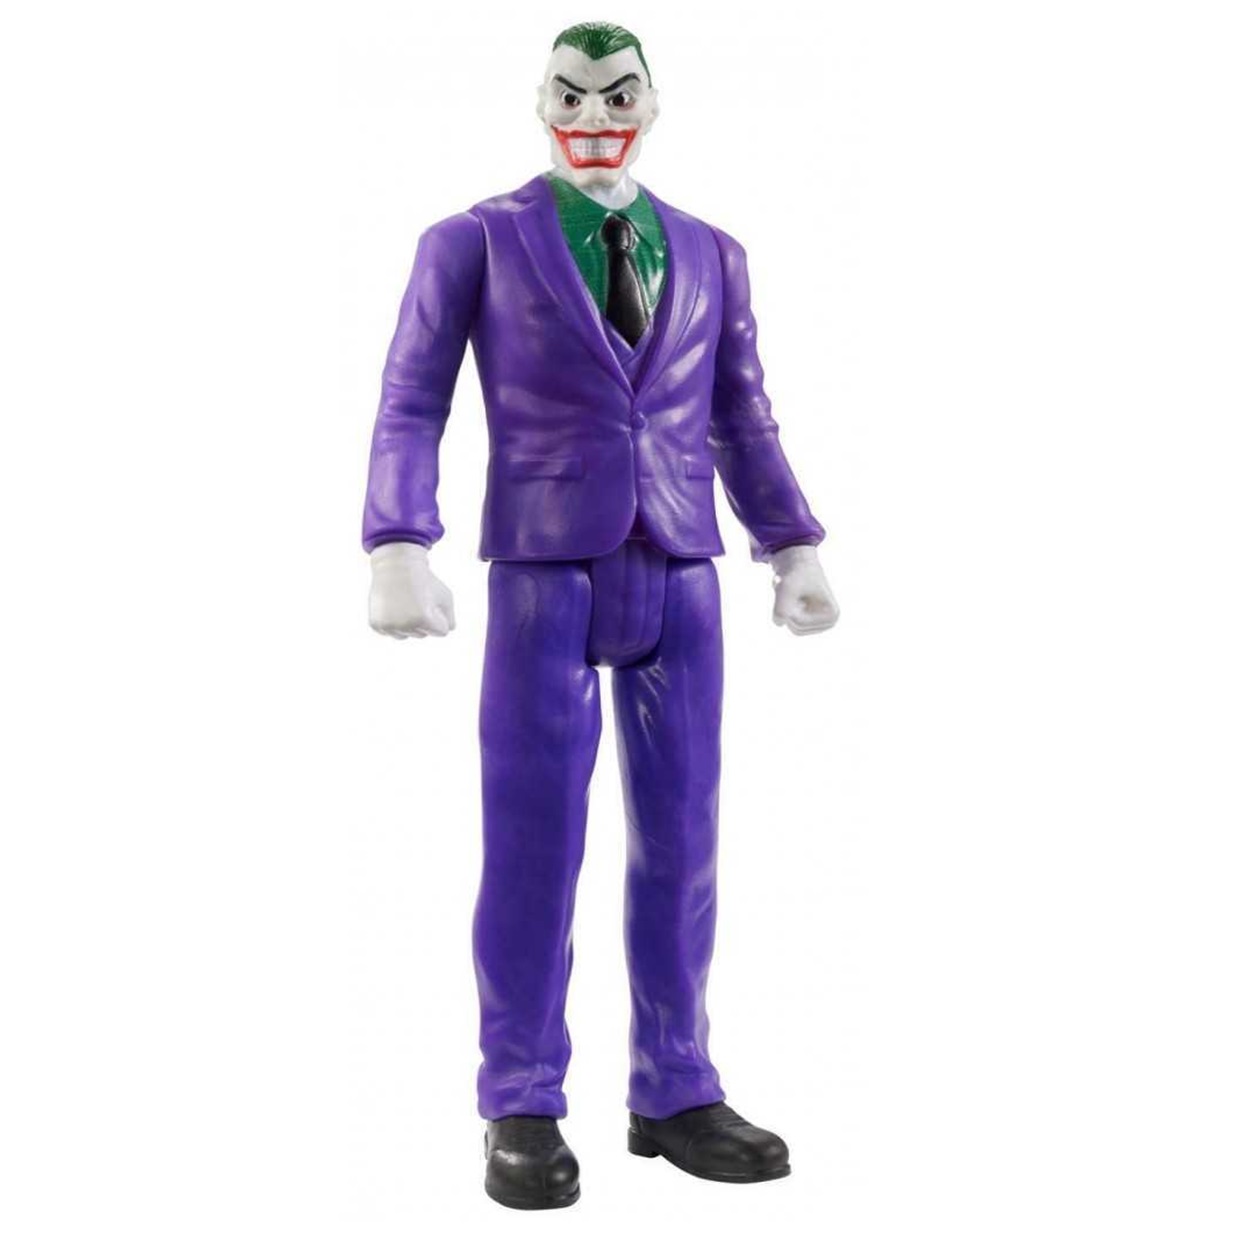 The Joker Missions Figura Dc Batman 80th Years 6 PuLG